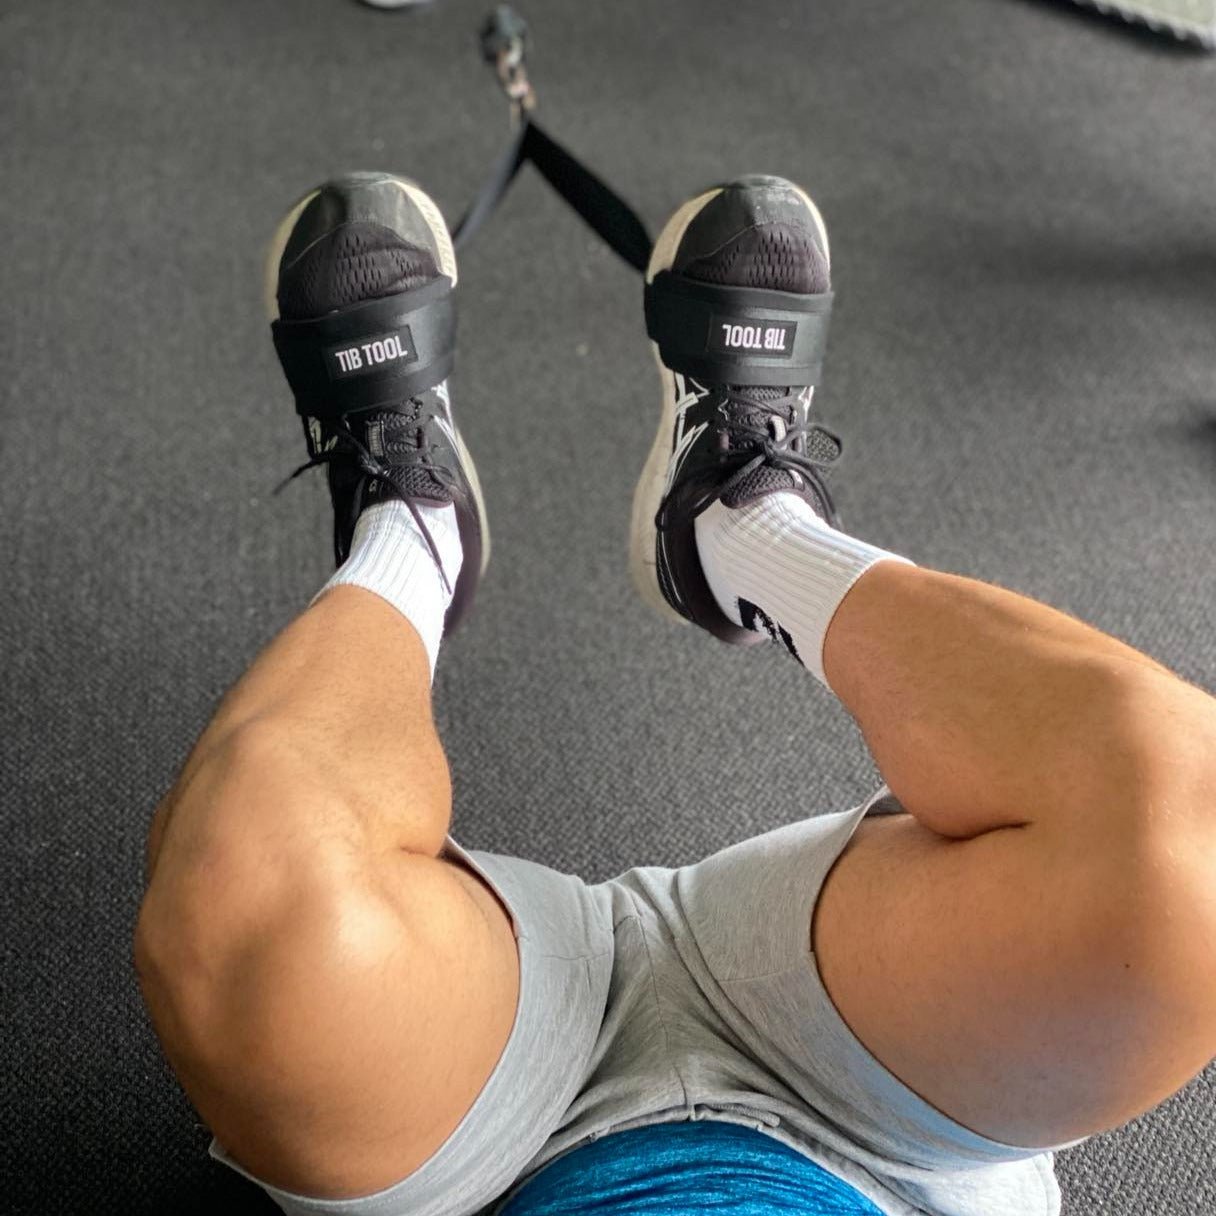 Squat wedge, reverse squat strap, knees over toes guy, tib bar